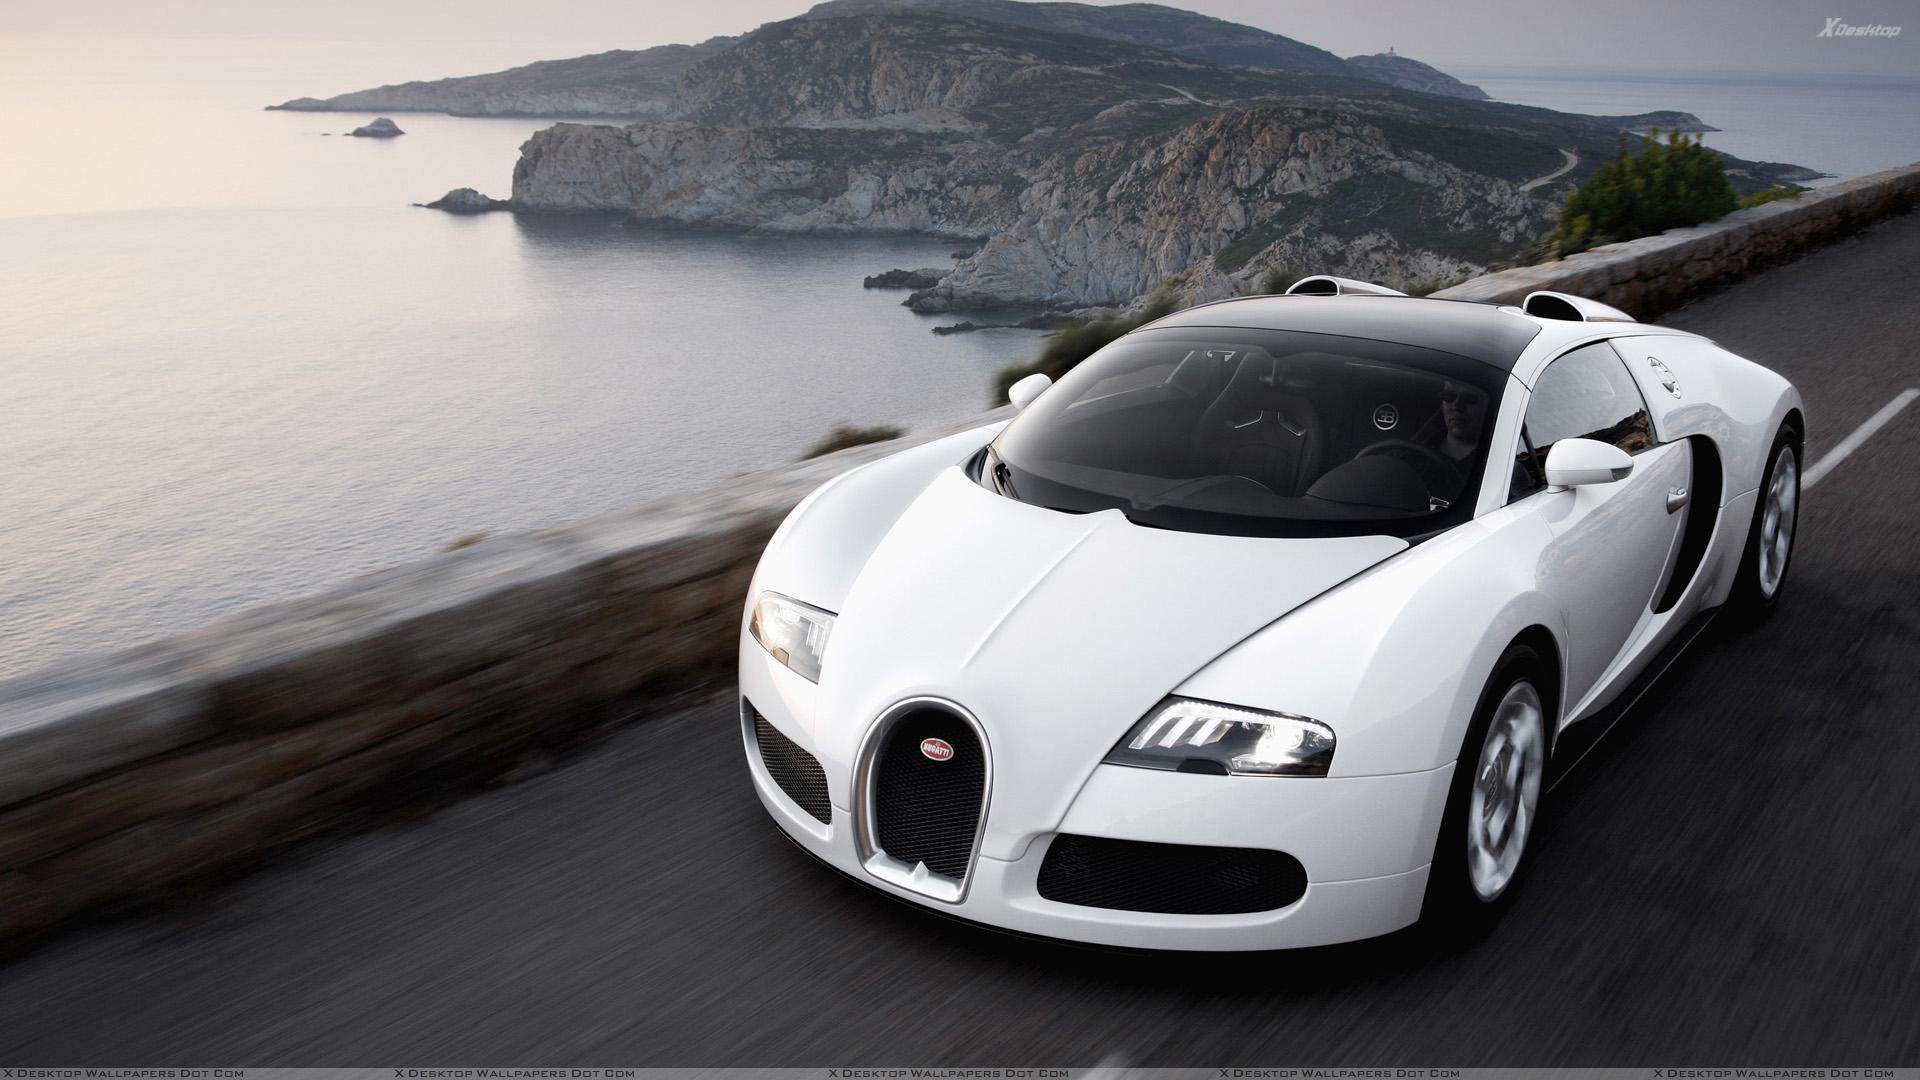 Bugatti Veyron Wallpaper, Photo & Image in HD